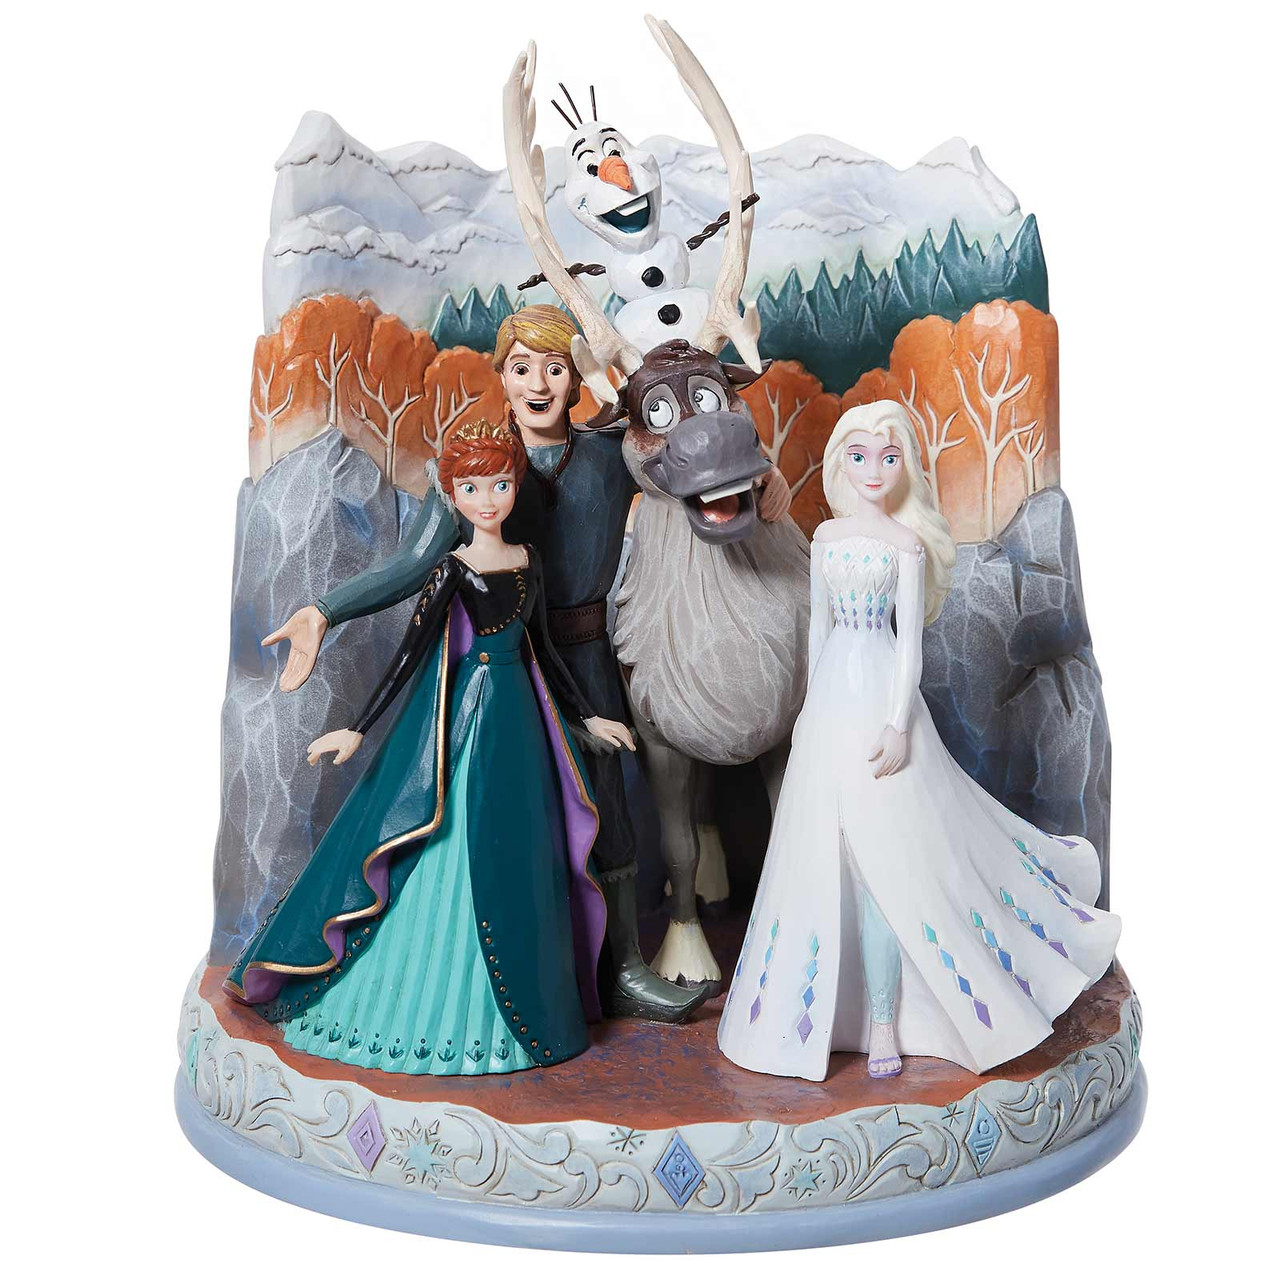 Disney Traditions Frozen 2 Scene Figurine by Jim Shore